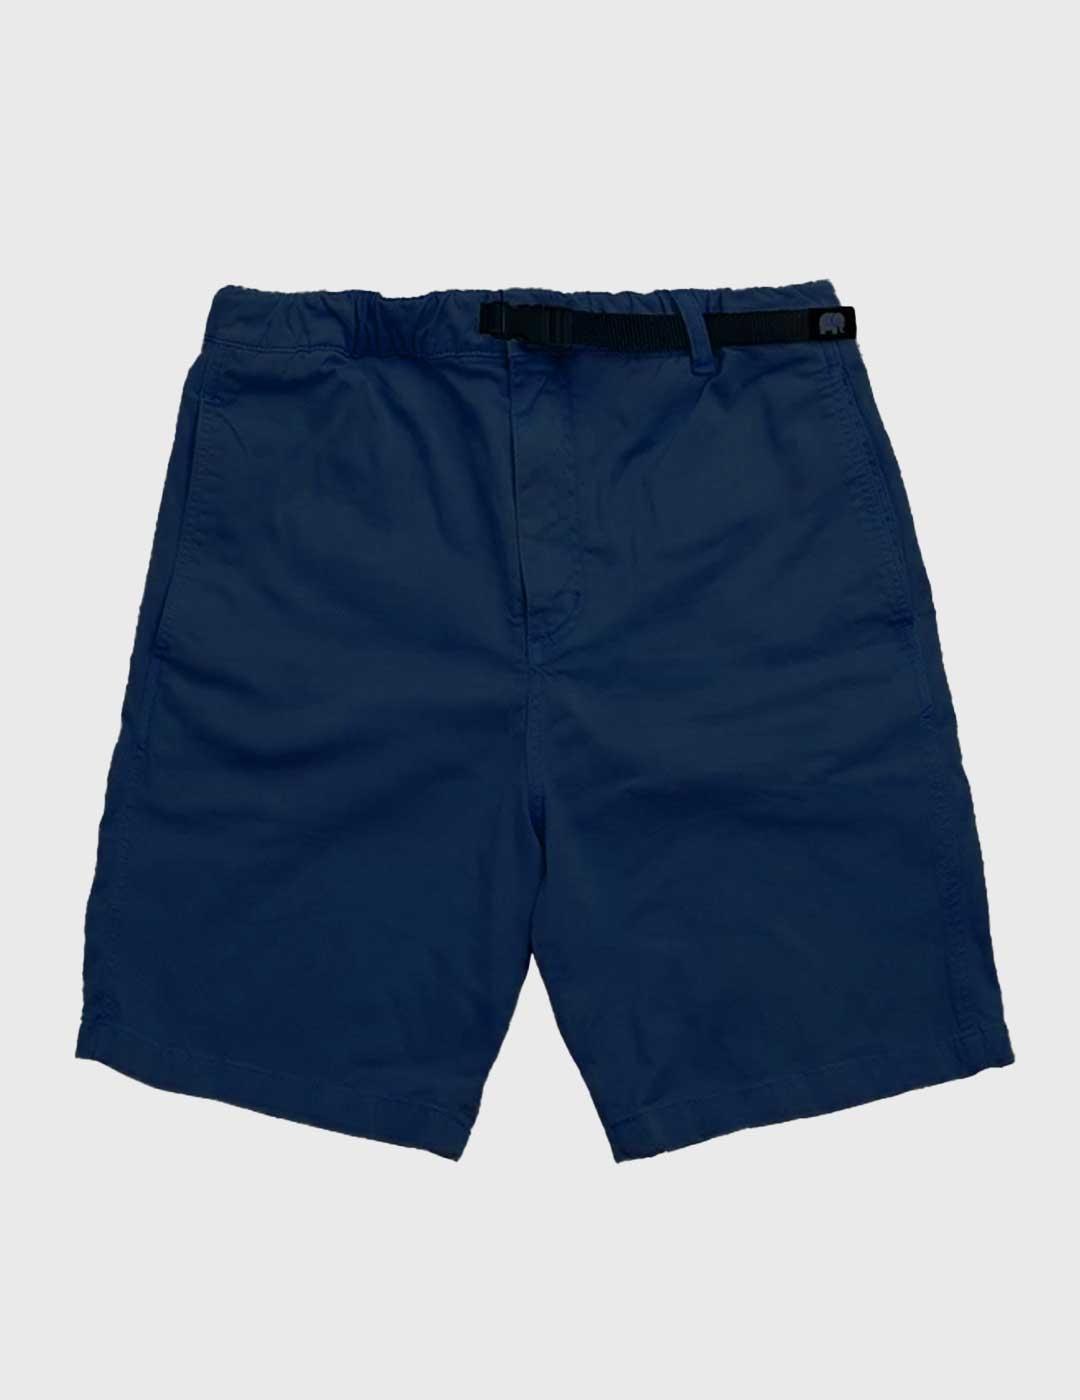 Trendsplatn Ecodye Climber Shorts Pantalones cortos azules